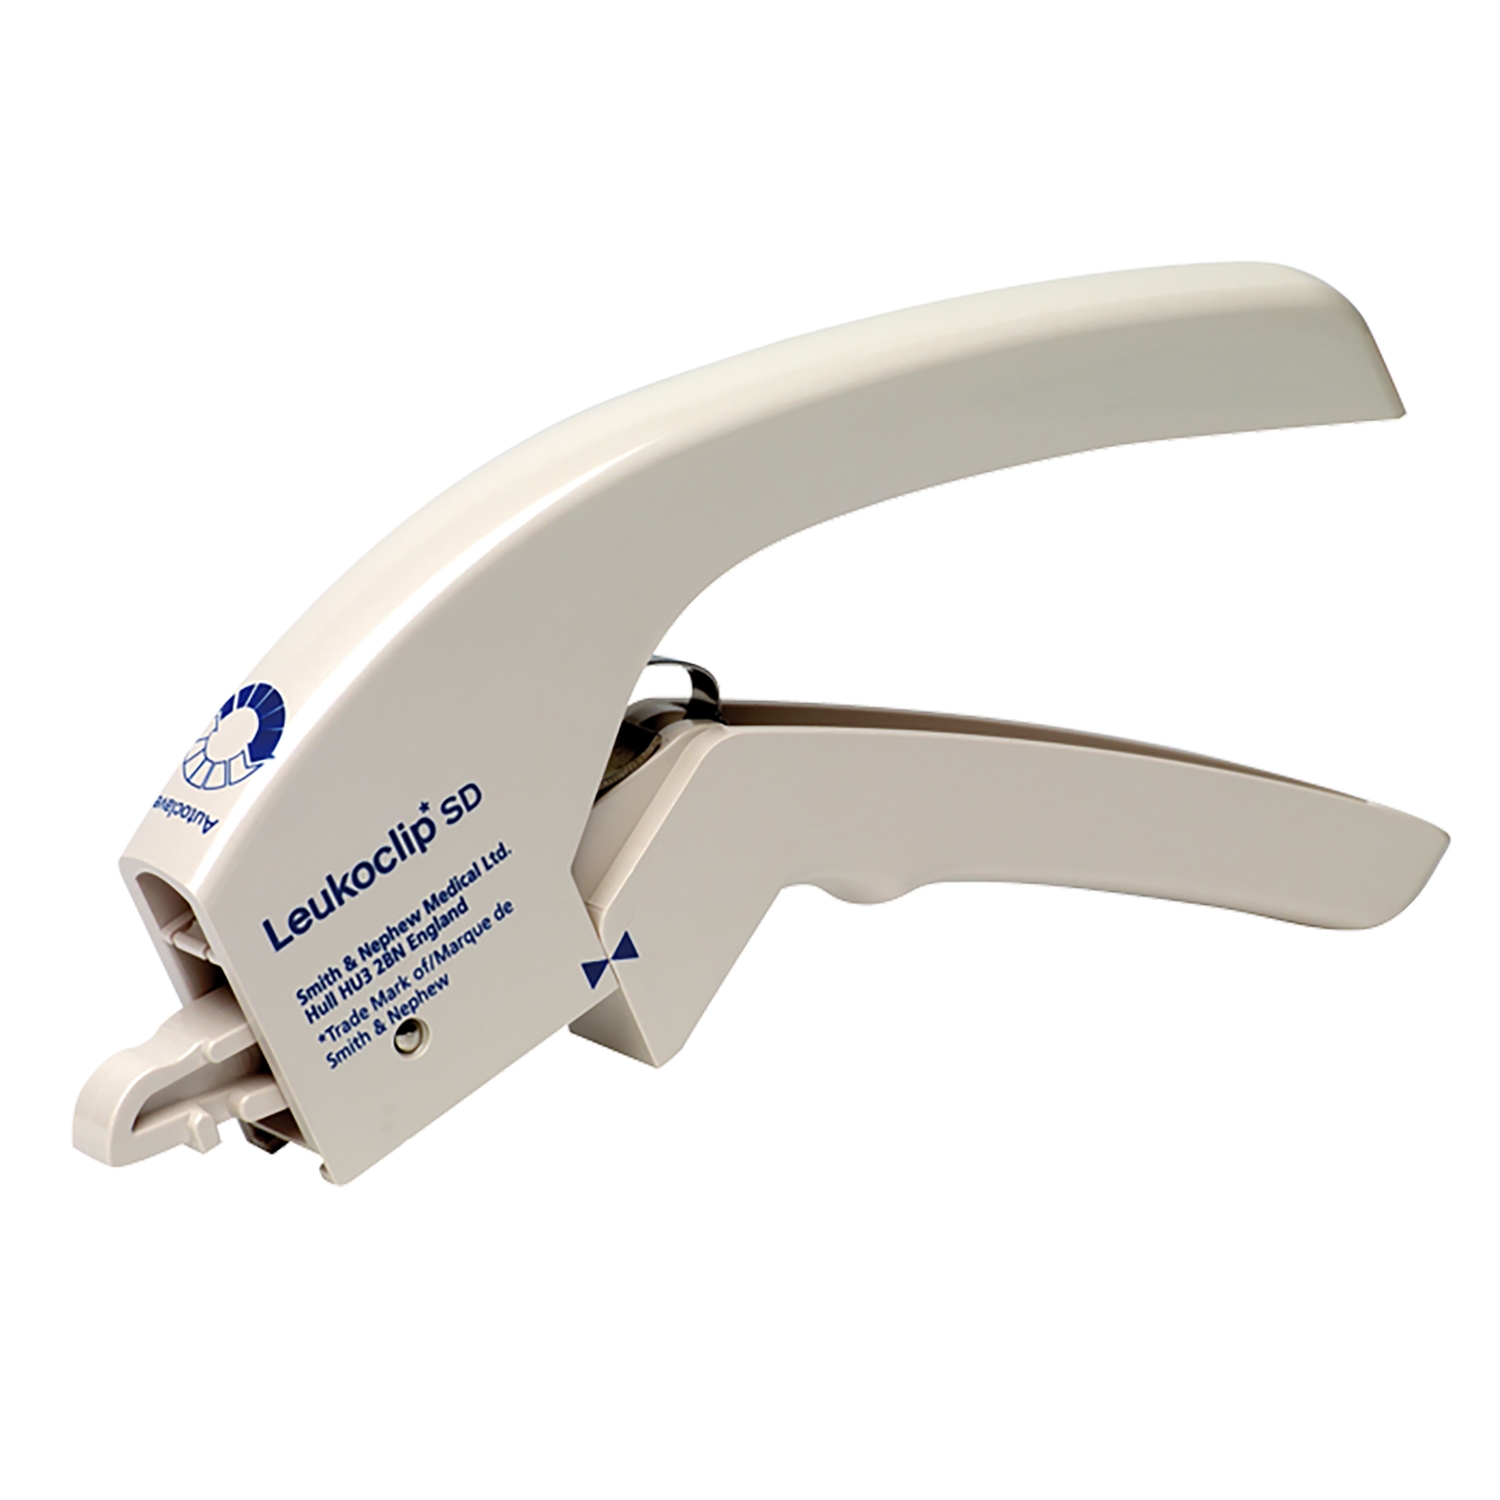 Leukoclip semi-disposable skin stapler